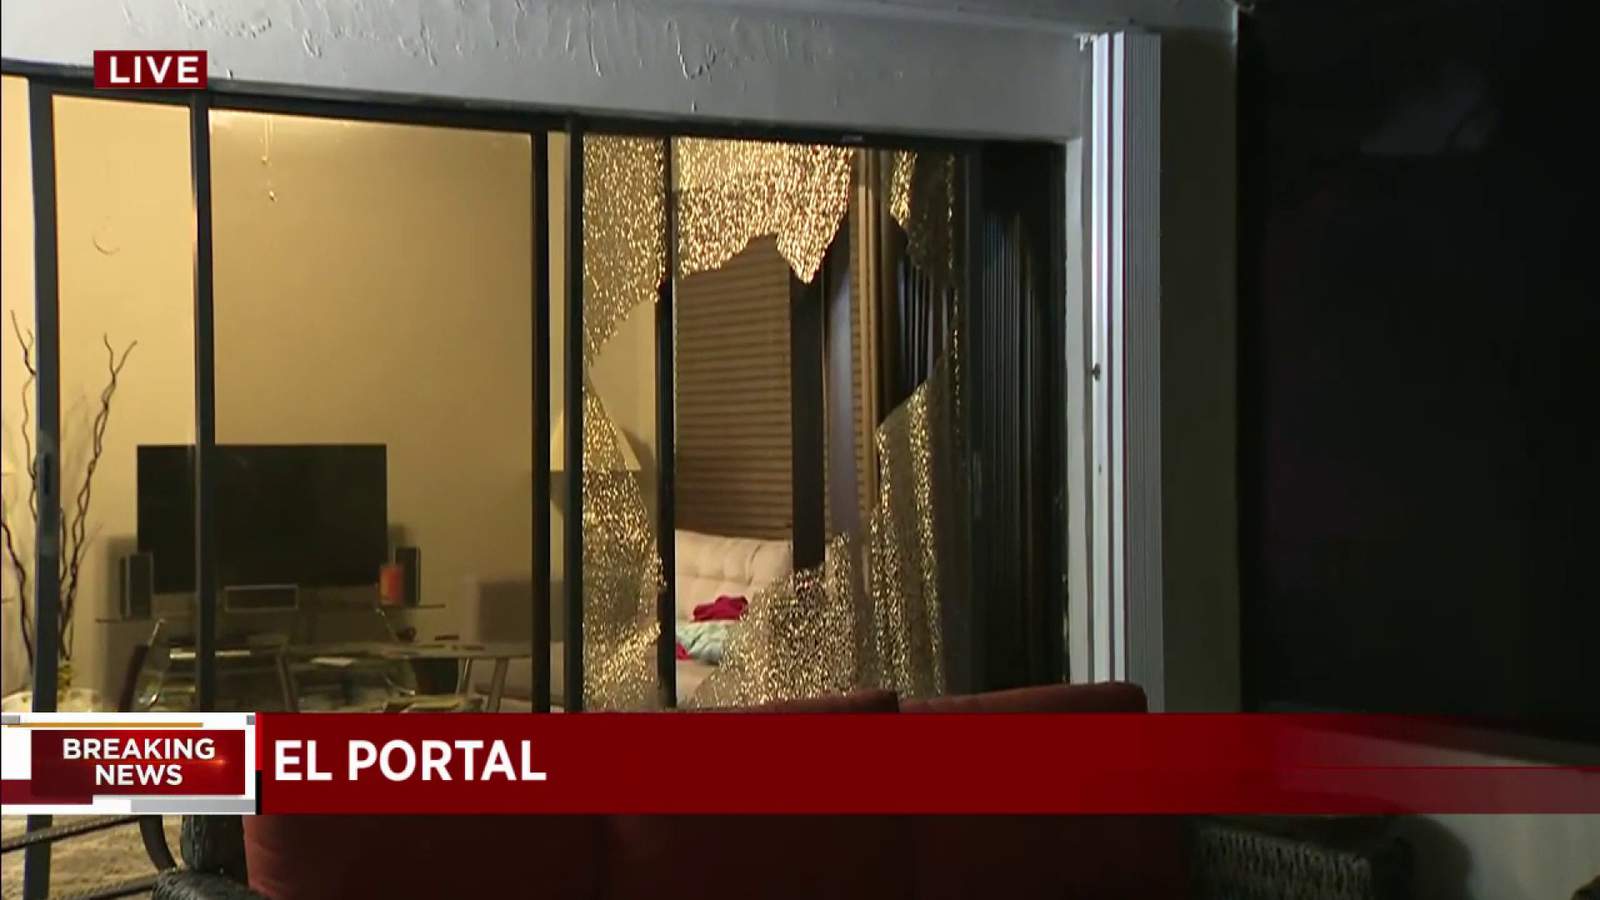 ‘Somebody shot into my house,’ El Portal resident tells police